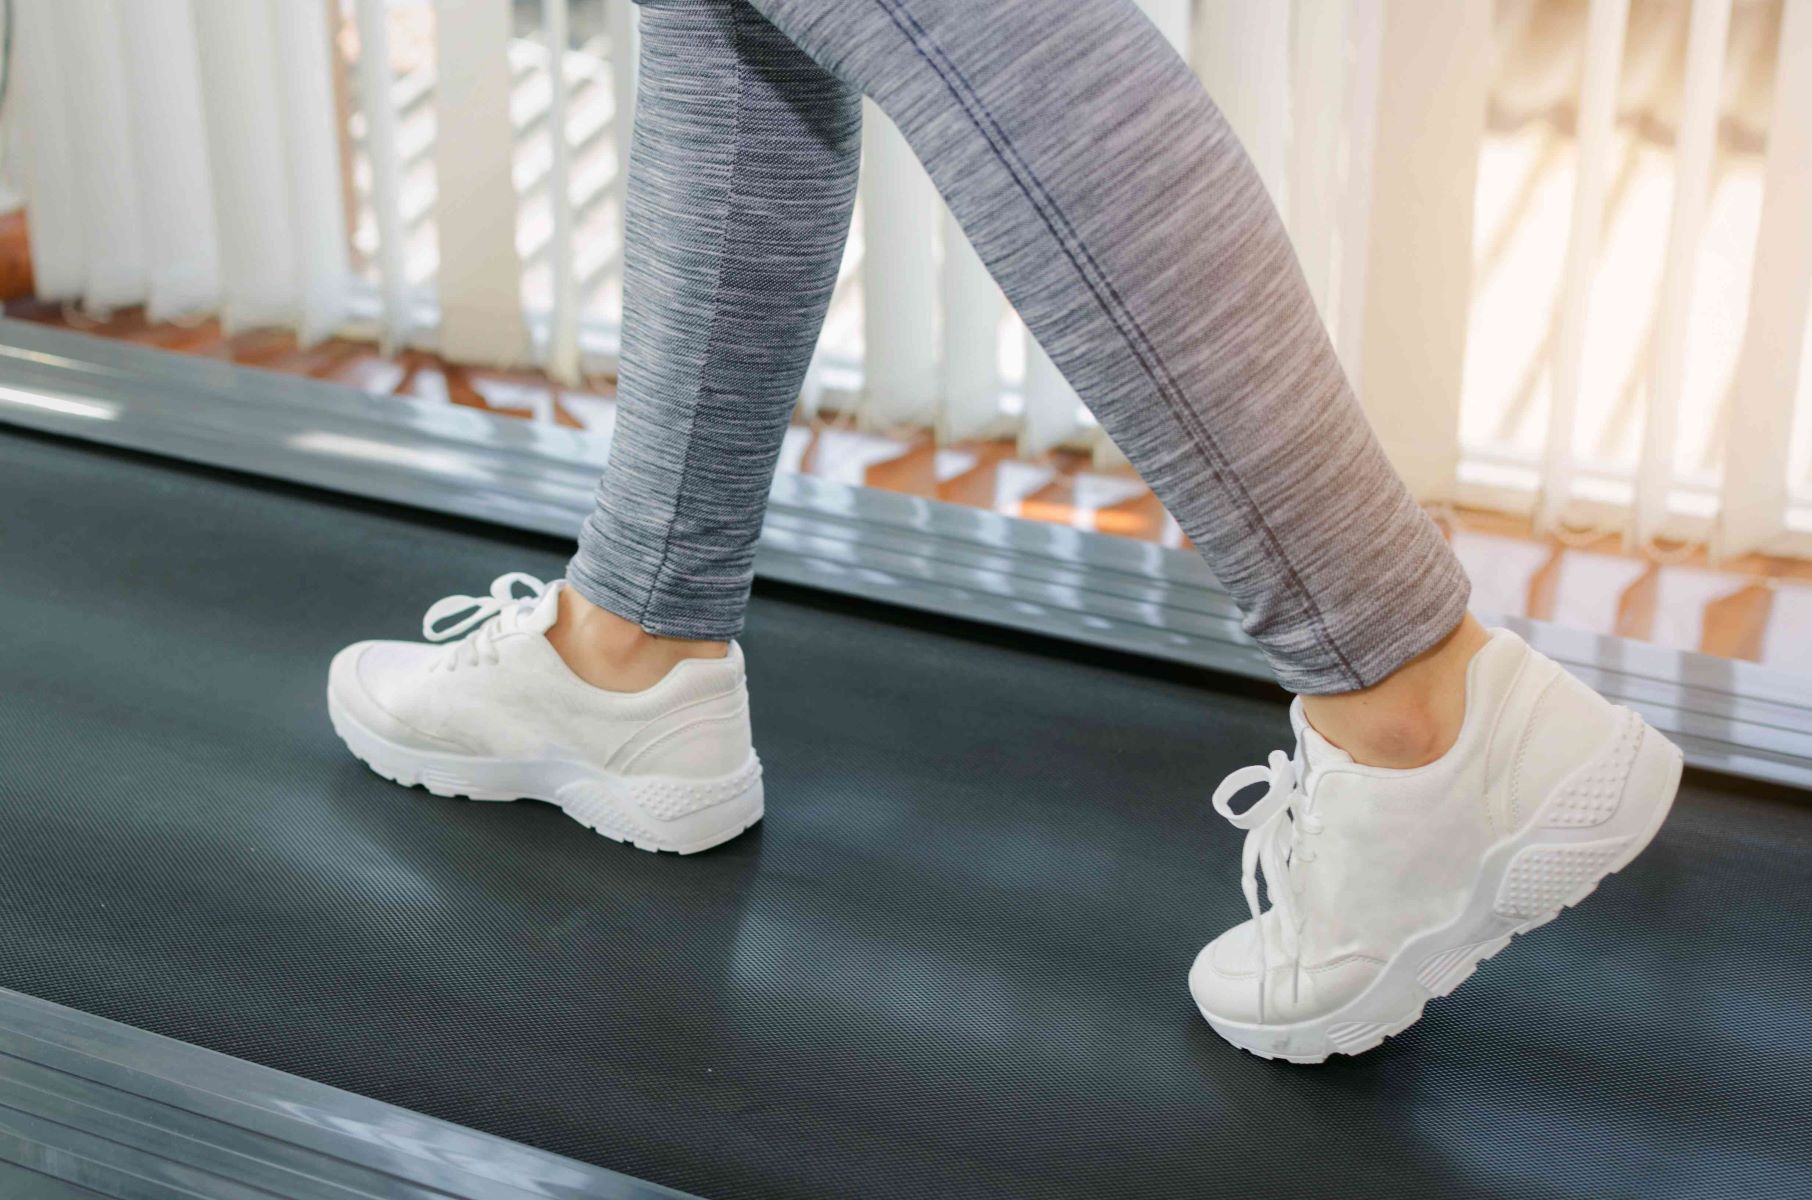 Why Does The Treadmill Belt Slip